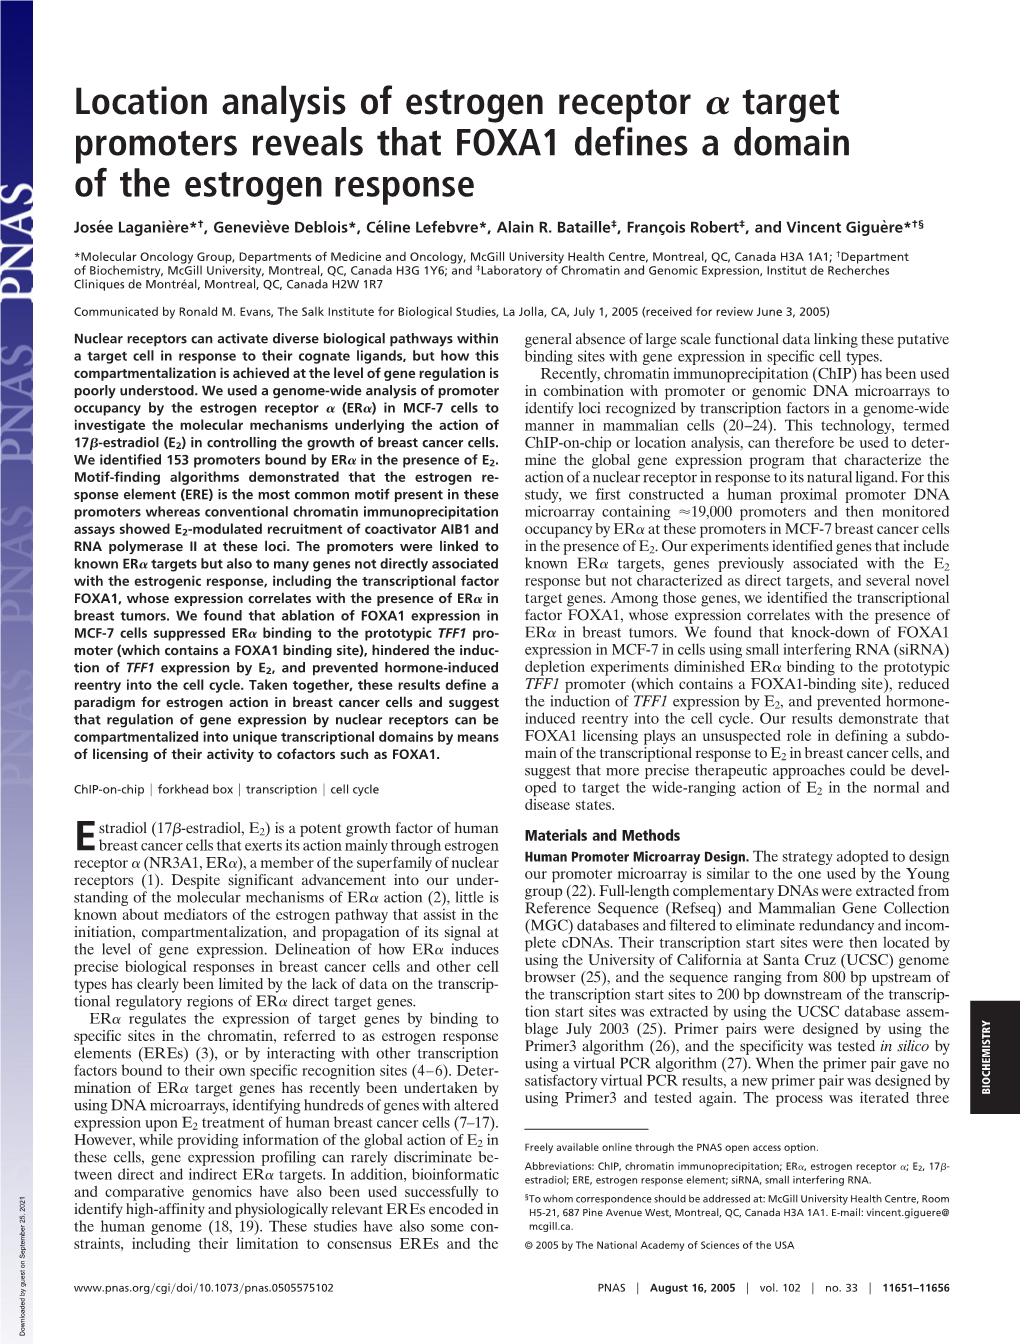 Location Analysis of Estrogen Receptor Target Promoters Reveals That